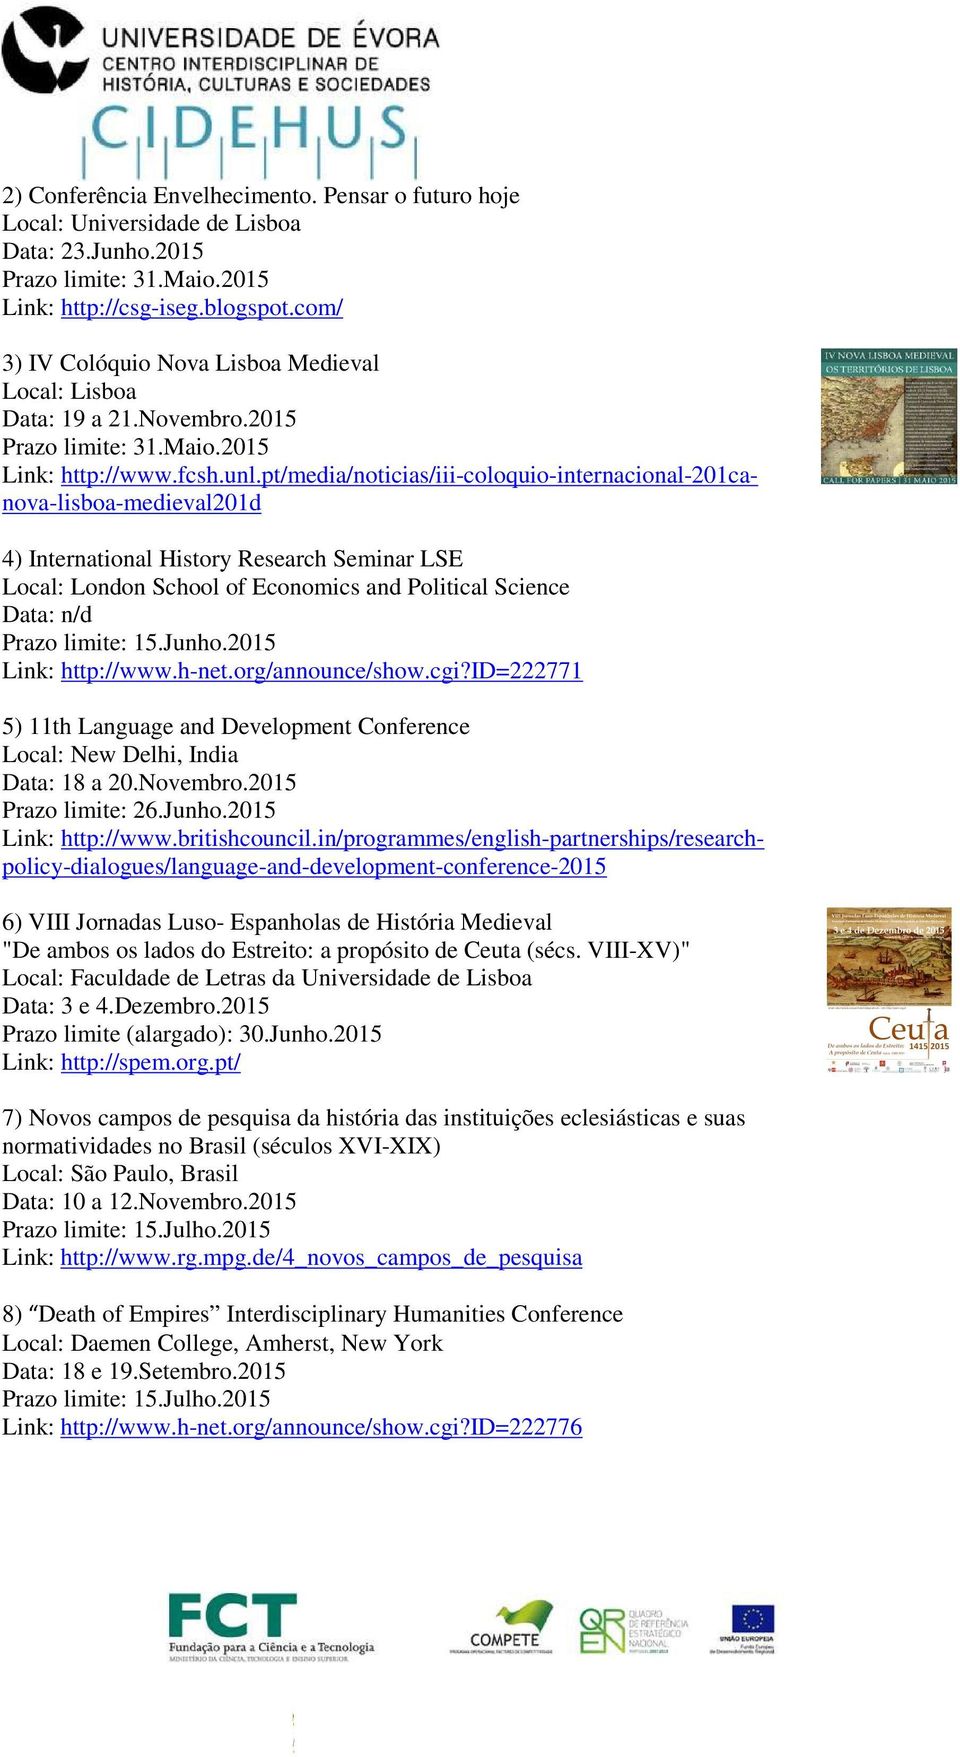 pt/media/noticias/iii-coloquio-internacional-201canova-lisboa-medieval201d 4) International History Research Seminar LSE Local: London School of Economics and Political Science Data: n/d Prazo